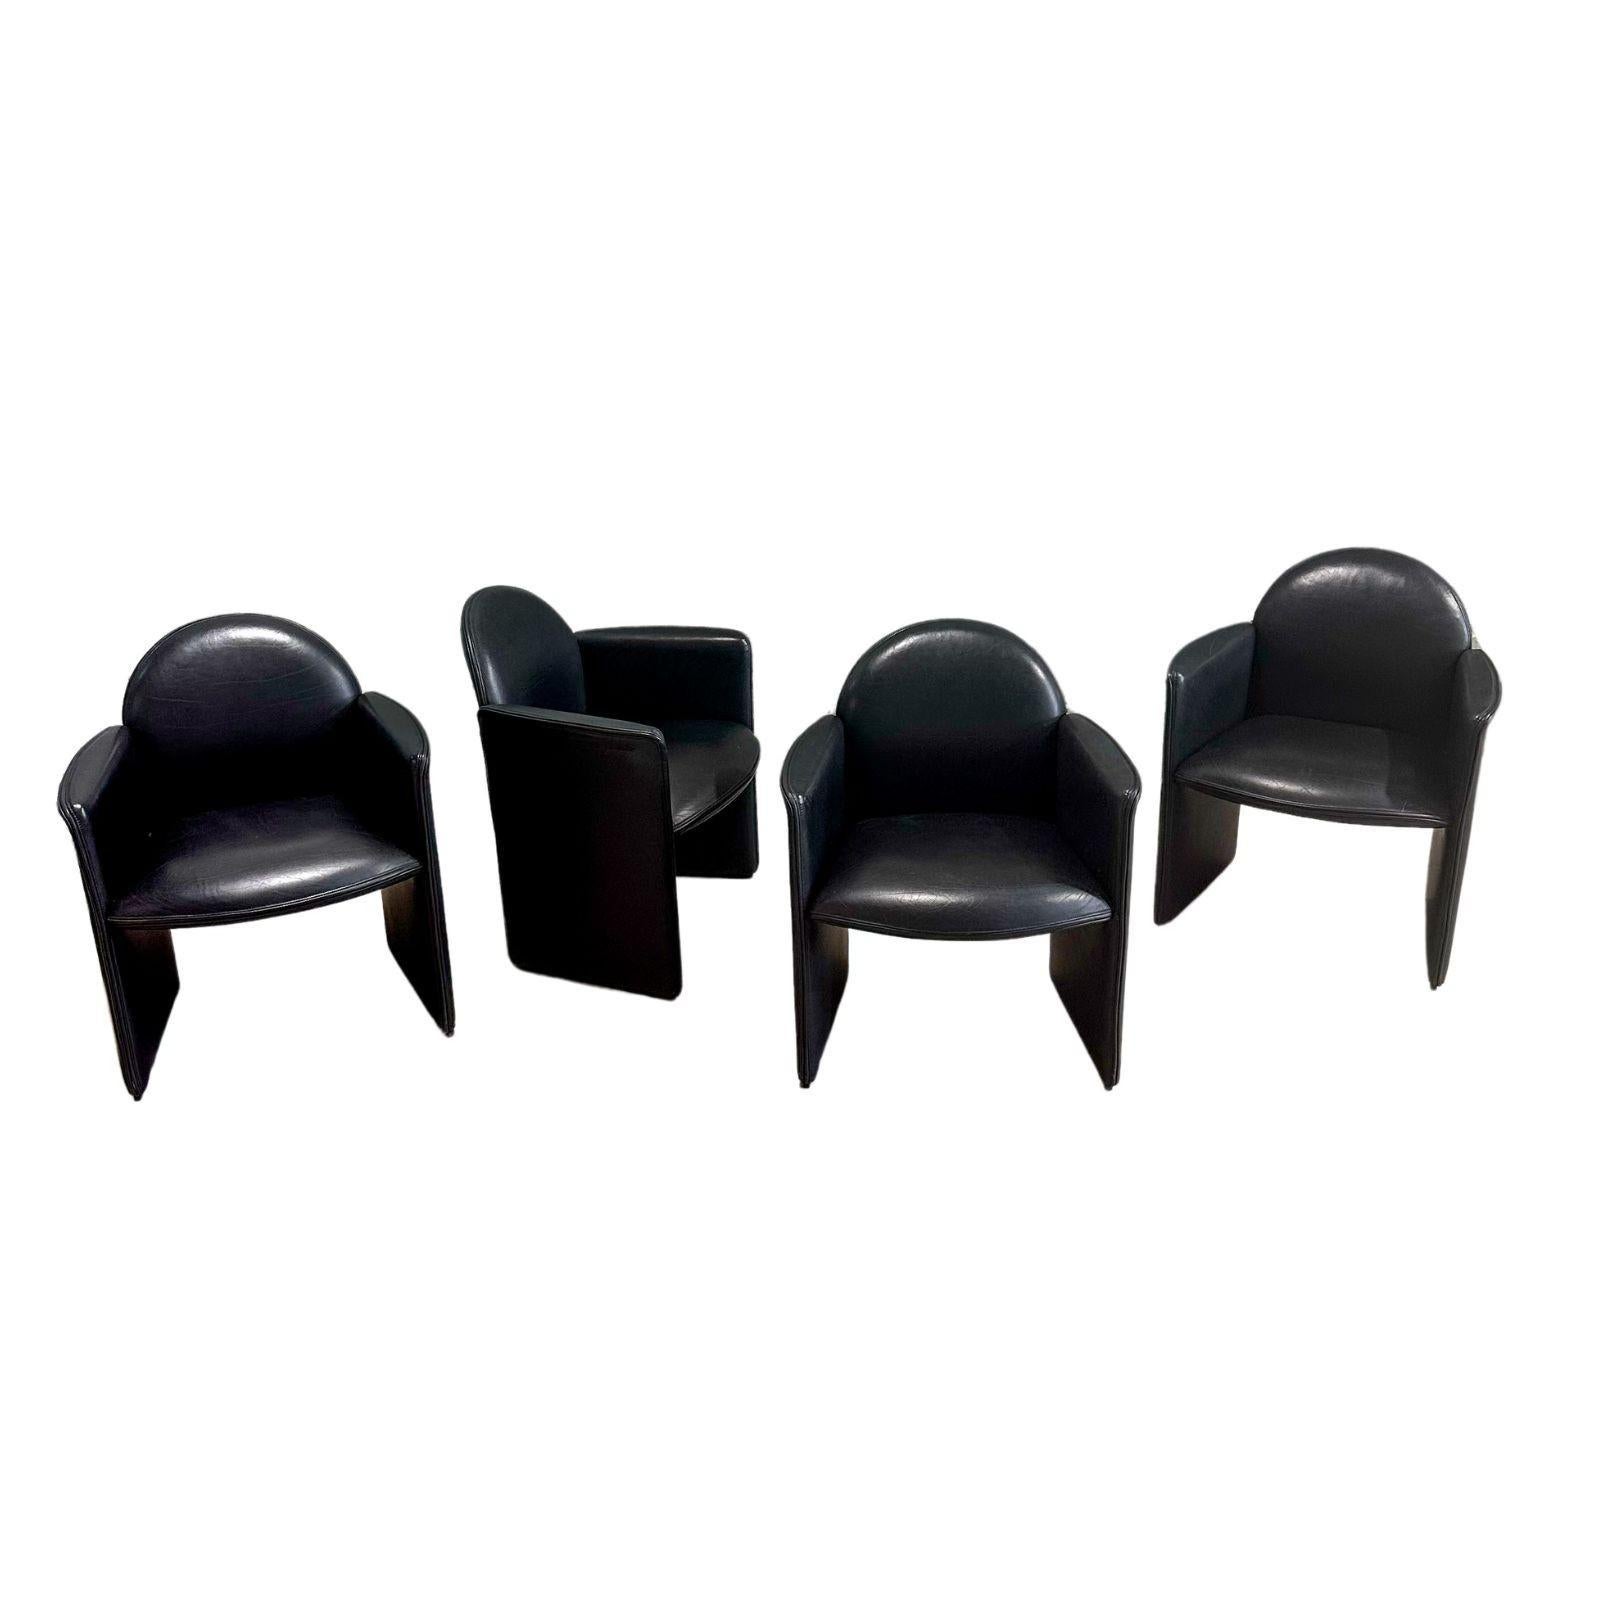 Set 4 Black Leather Italian Chairs, Italy 1980. Original leather.
Measure 31